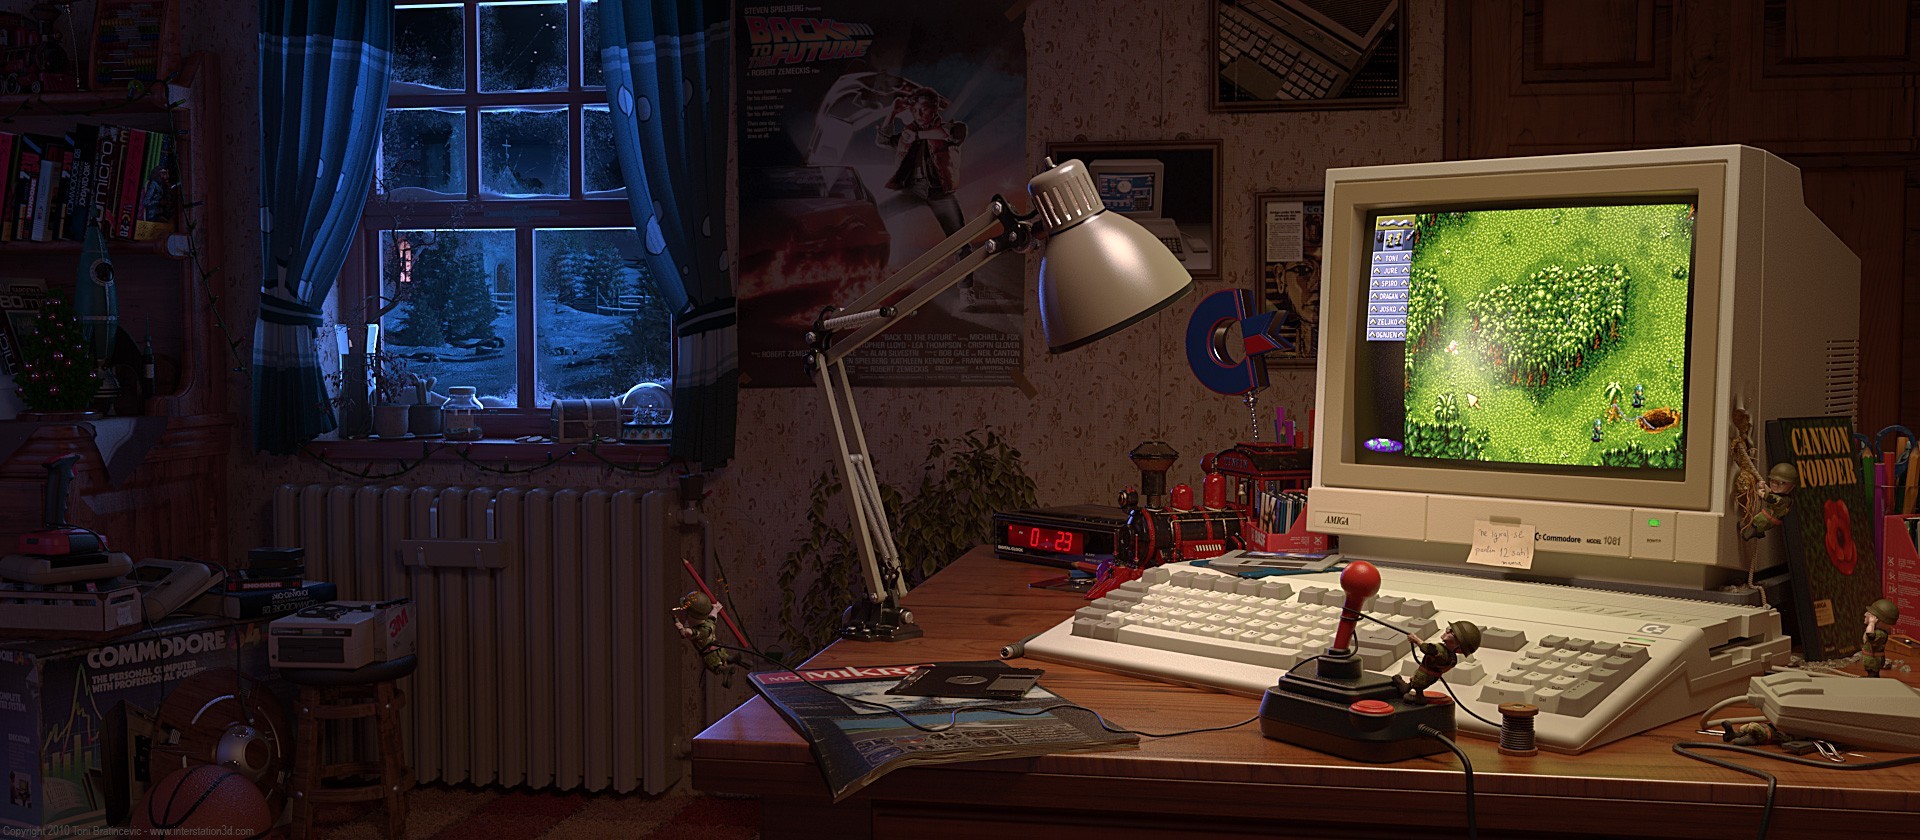 Amiga, Retro Games, Window, Computer, Joystick, Lamps, Bedrooms, Back To The Future Wallpaper